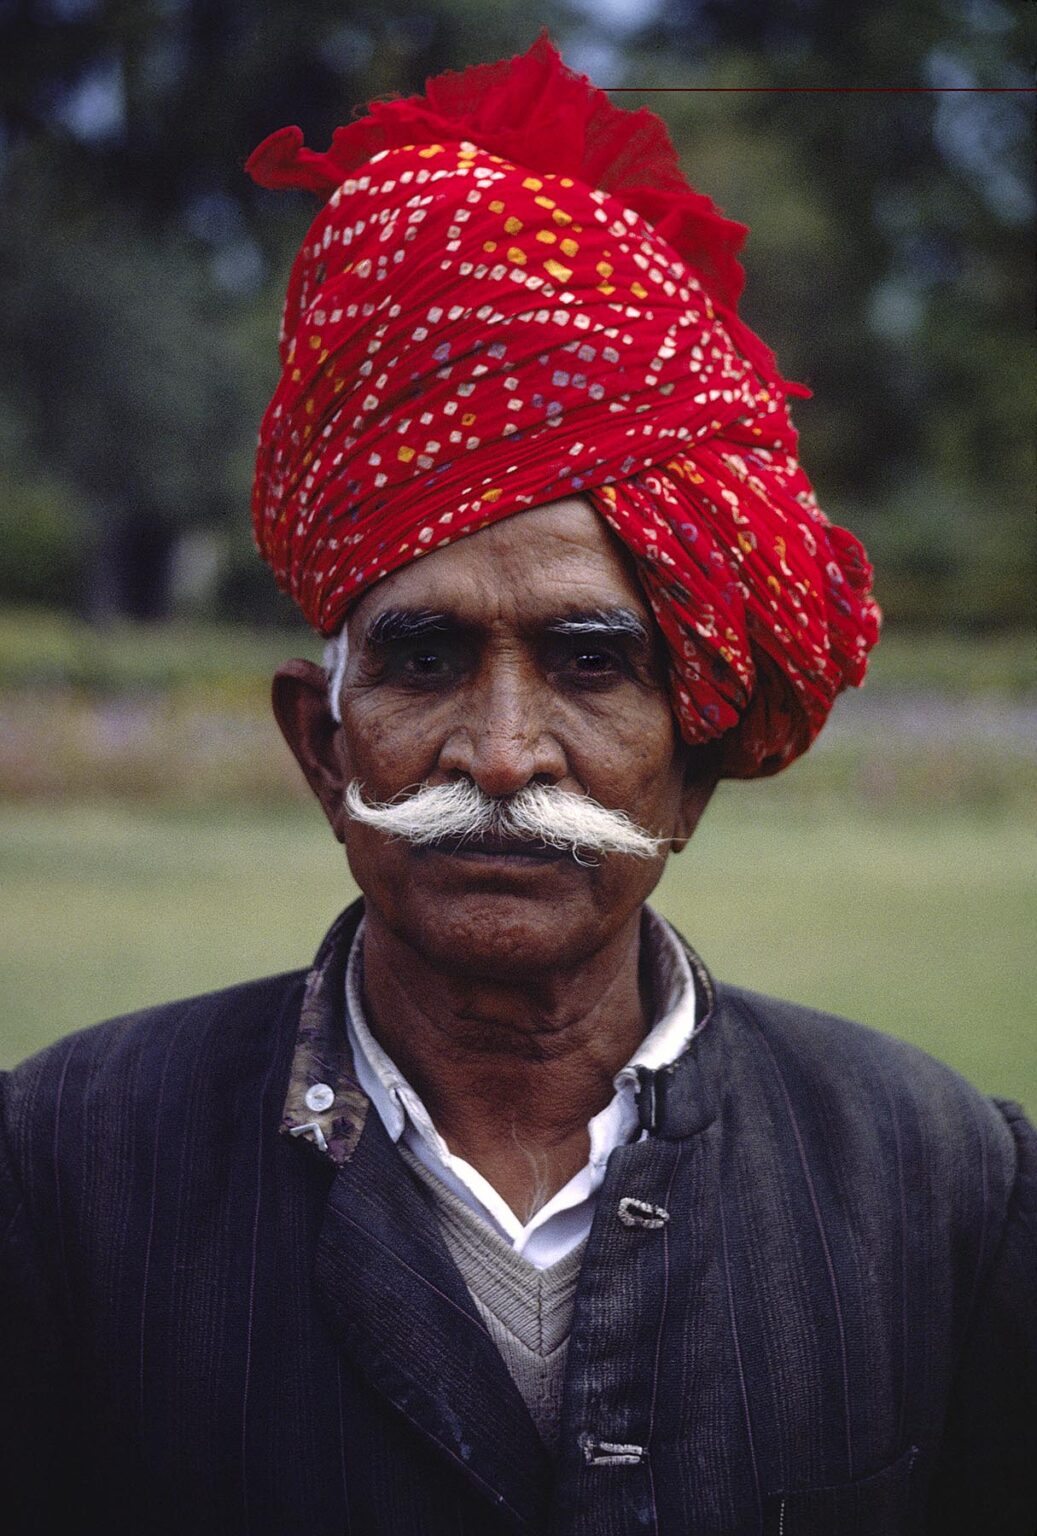 PORTRAIT of a RAJASTHANI MAN in the MOGHUL GARDEN of NISHAT in SRINIGAR - KASHMIR, INDIA